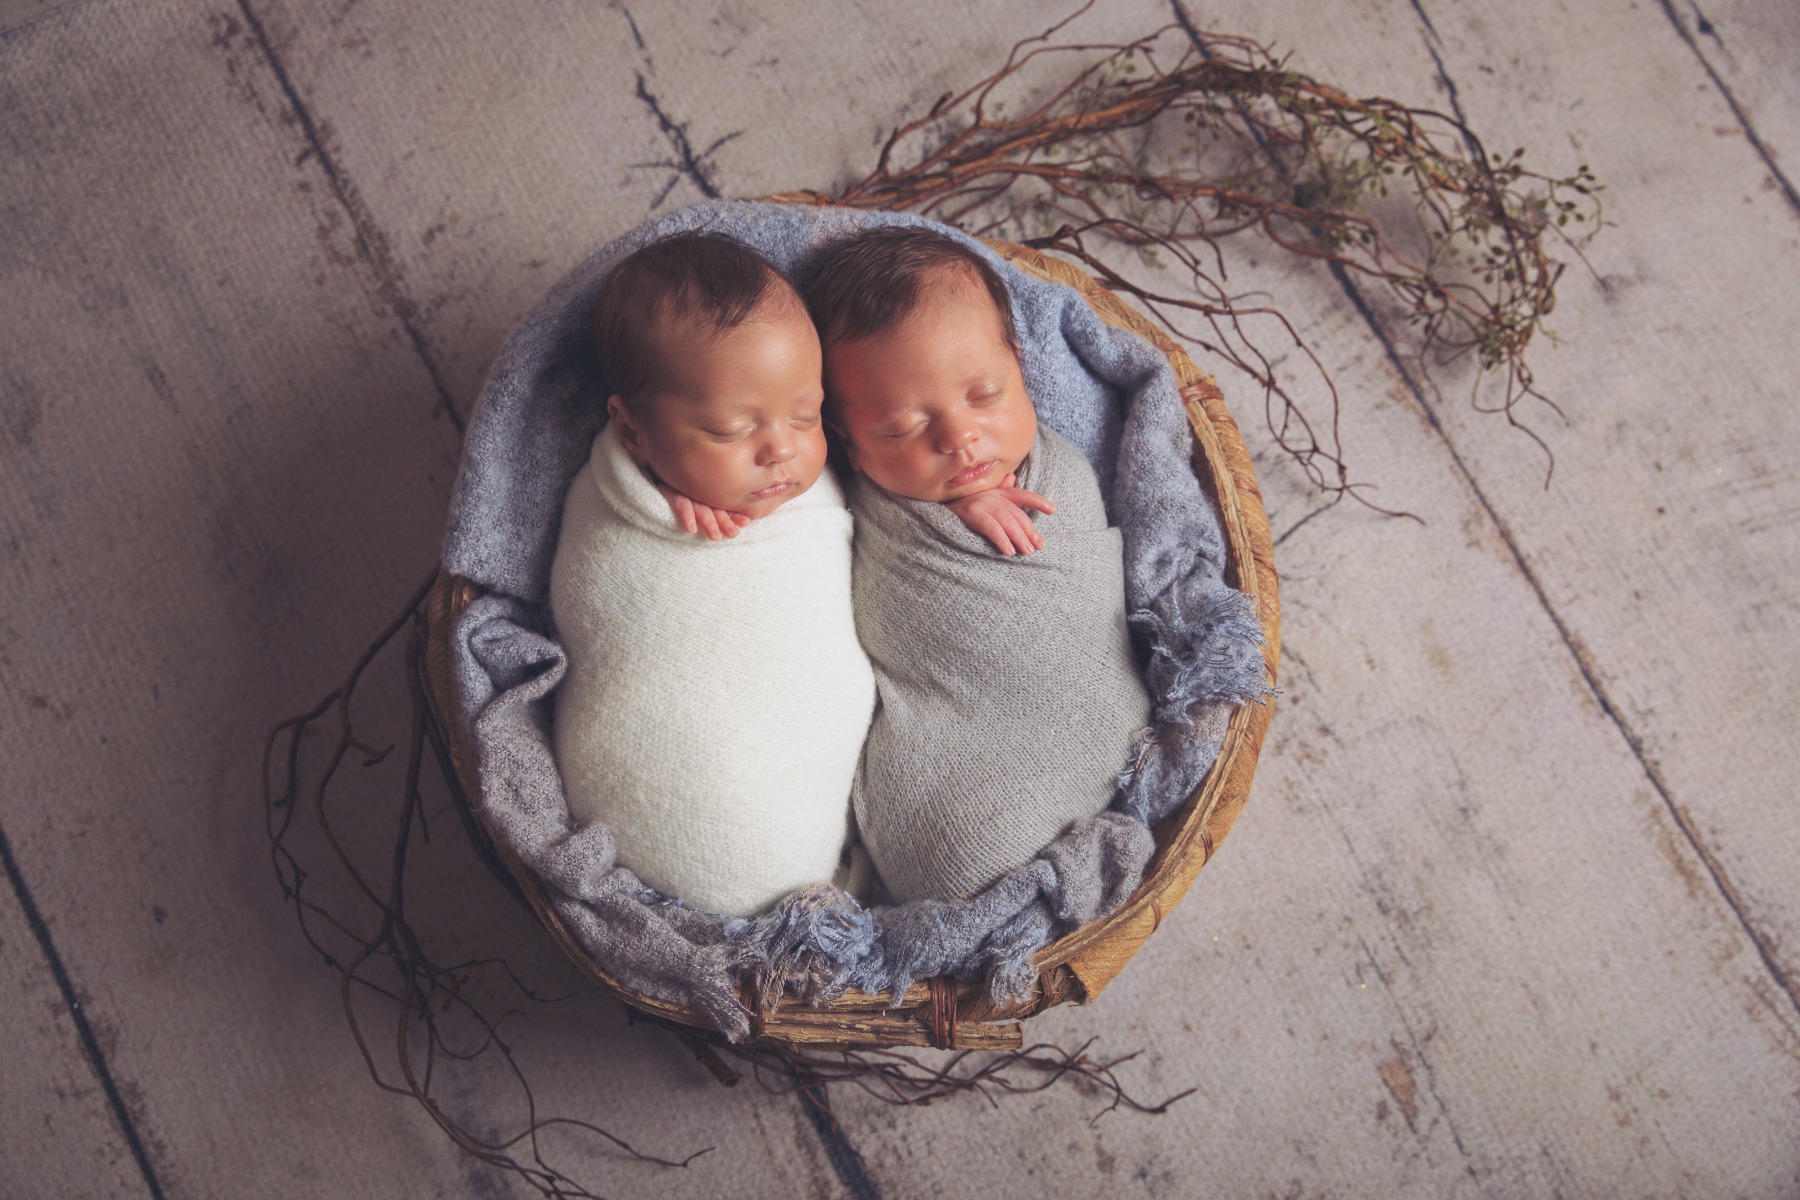 newborn twins in a basket with dried foliage